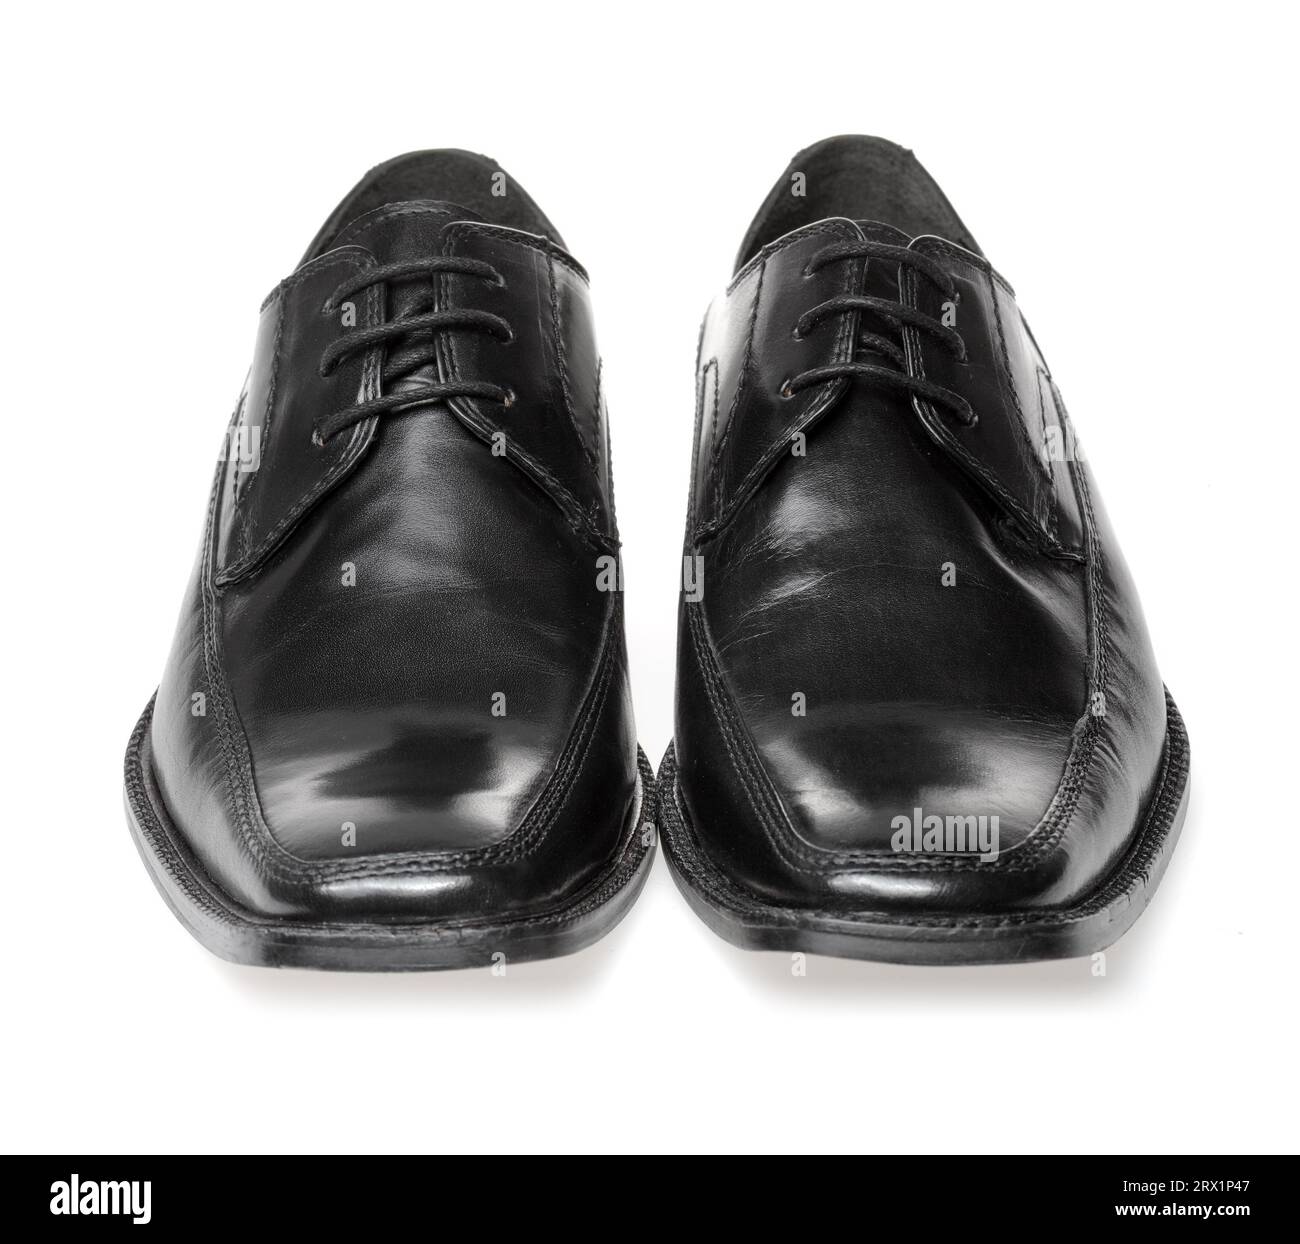 Men's black leather dress shoes Stock Photo - Alamy